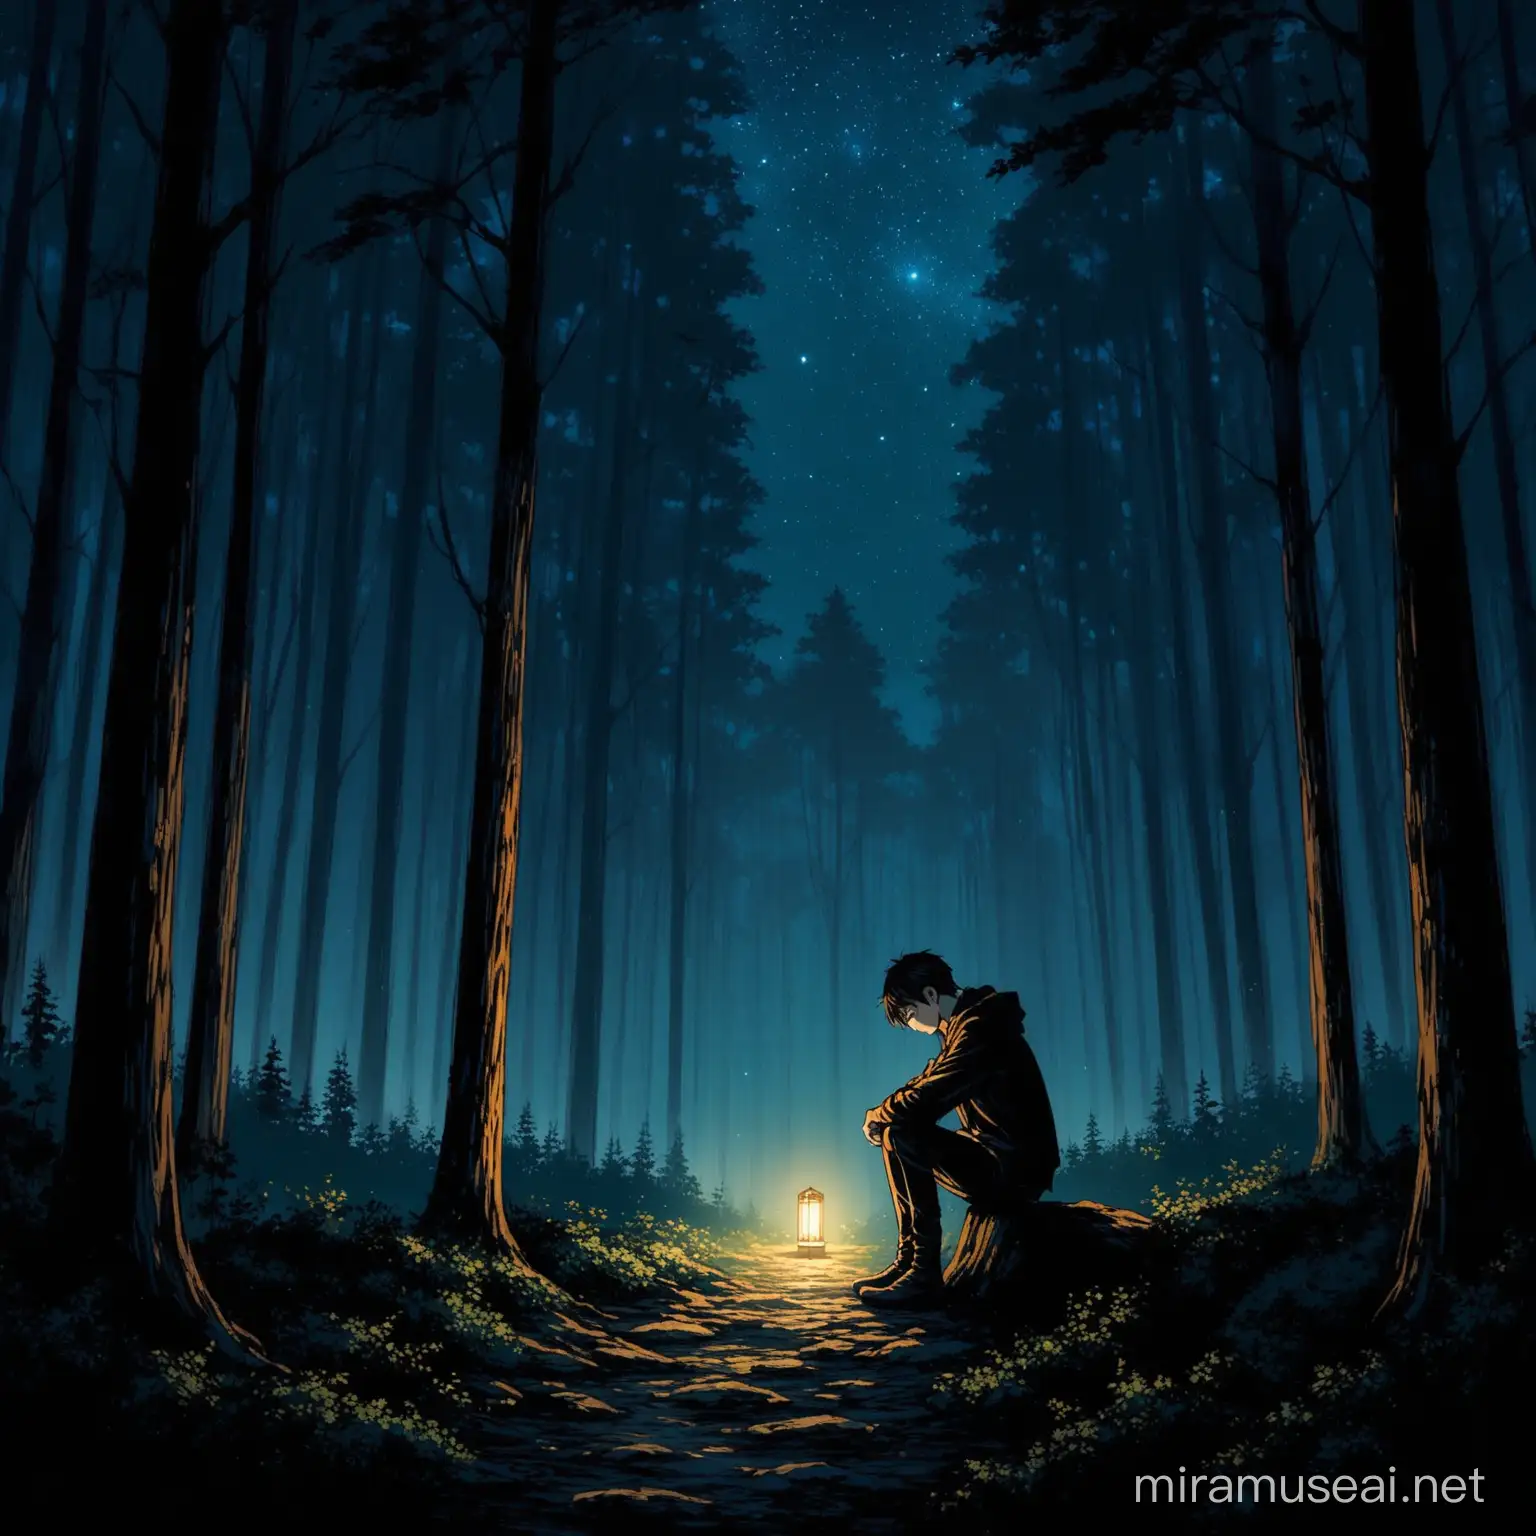 Male night sad alone forest